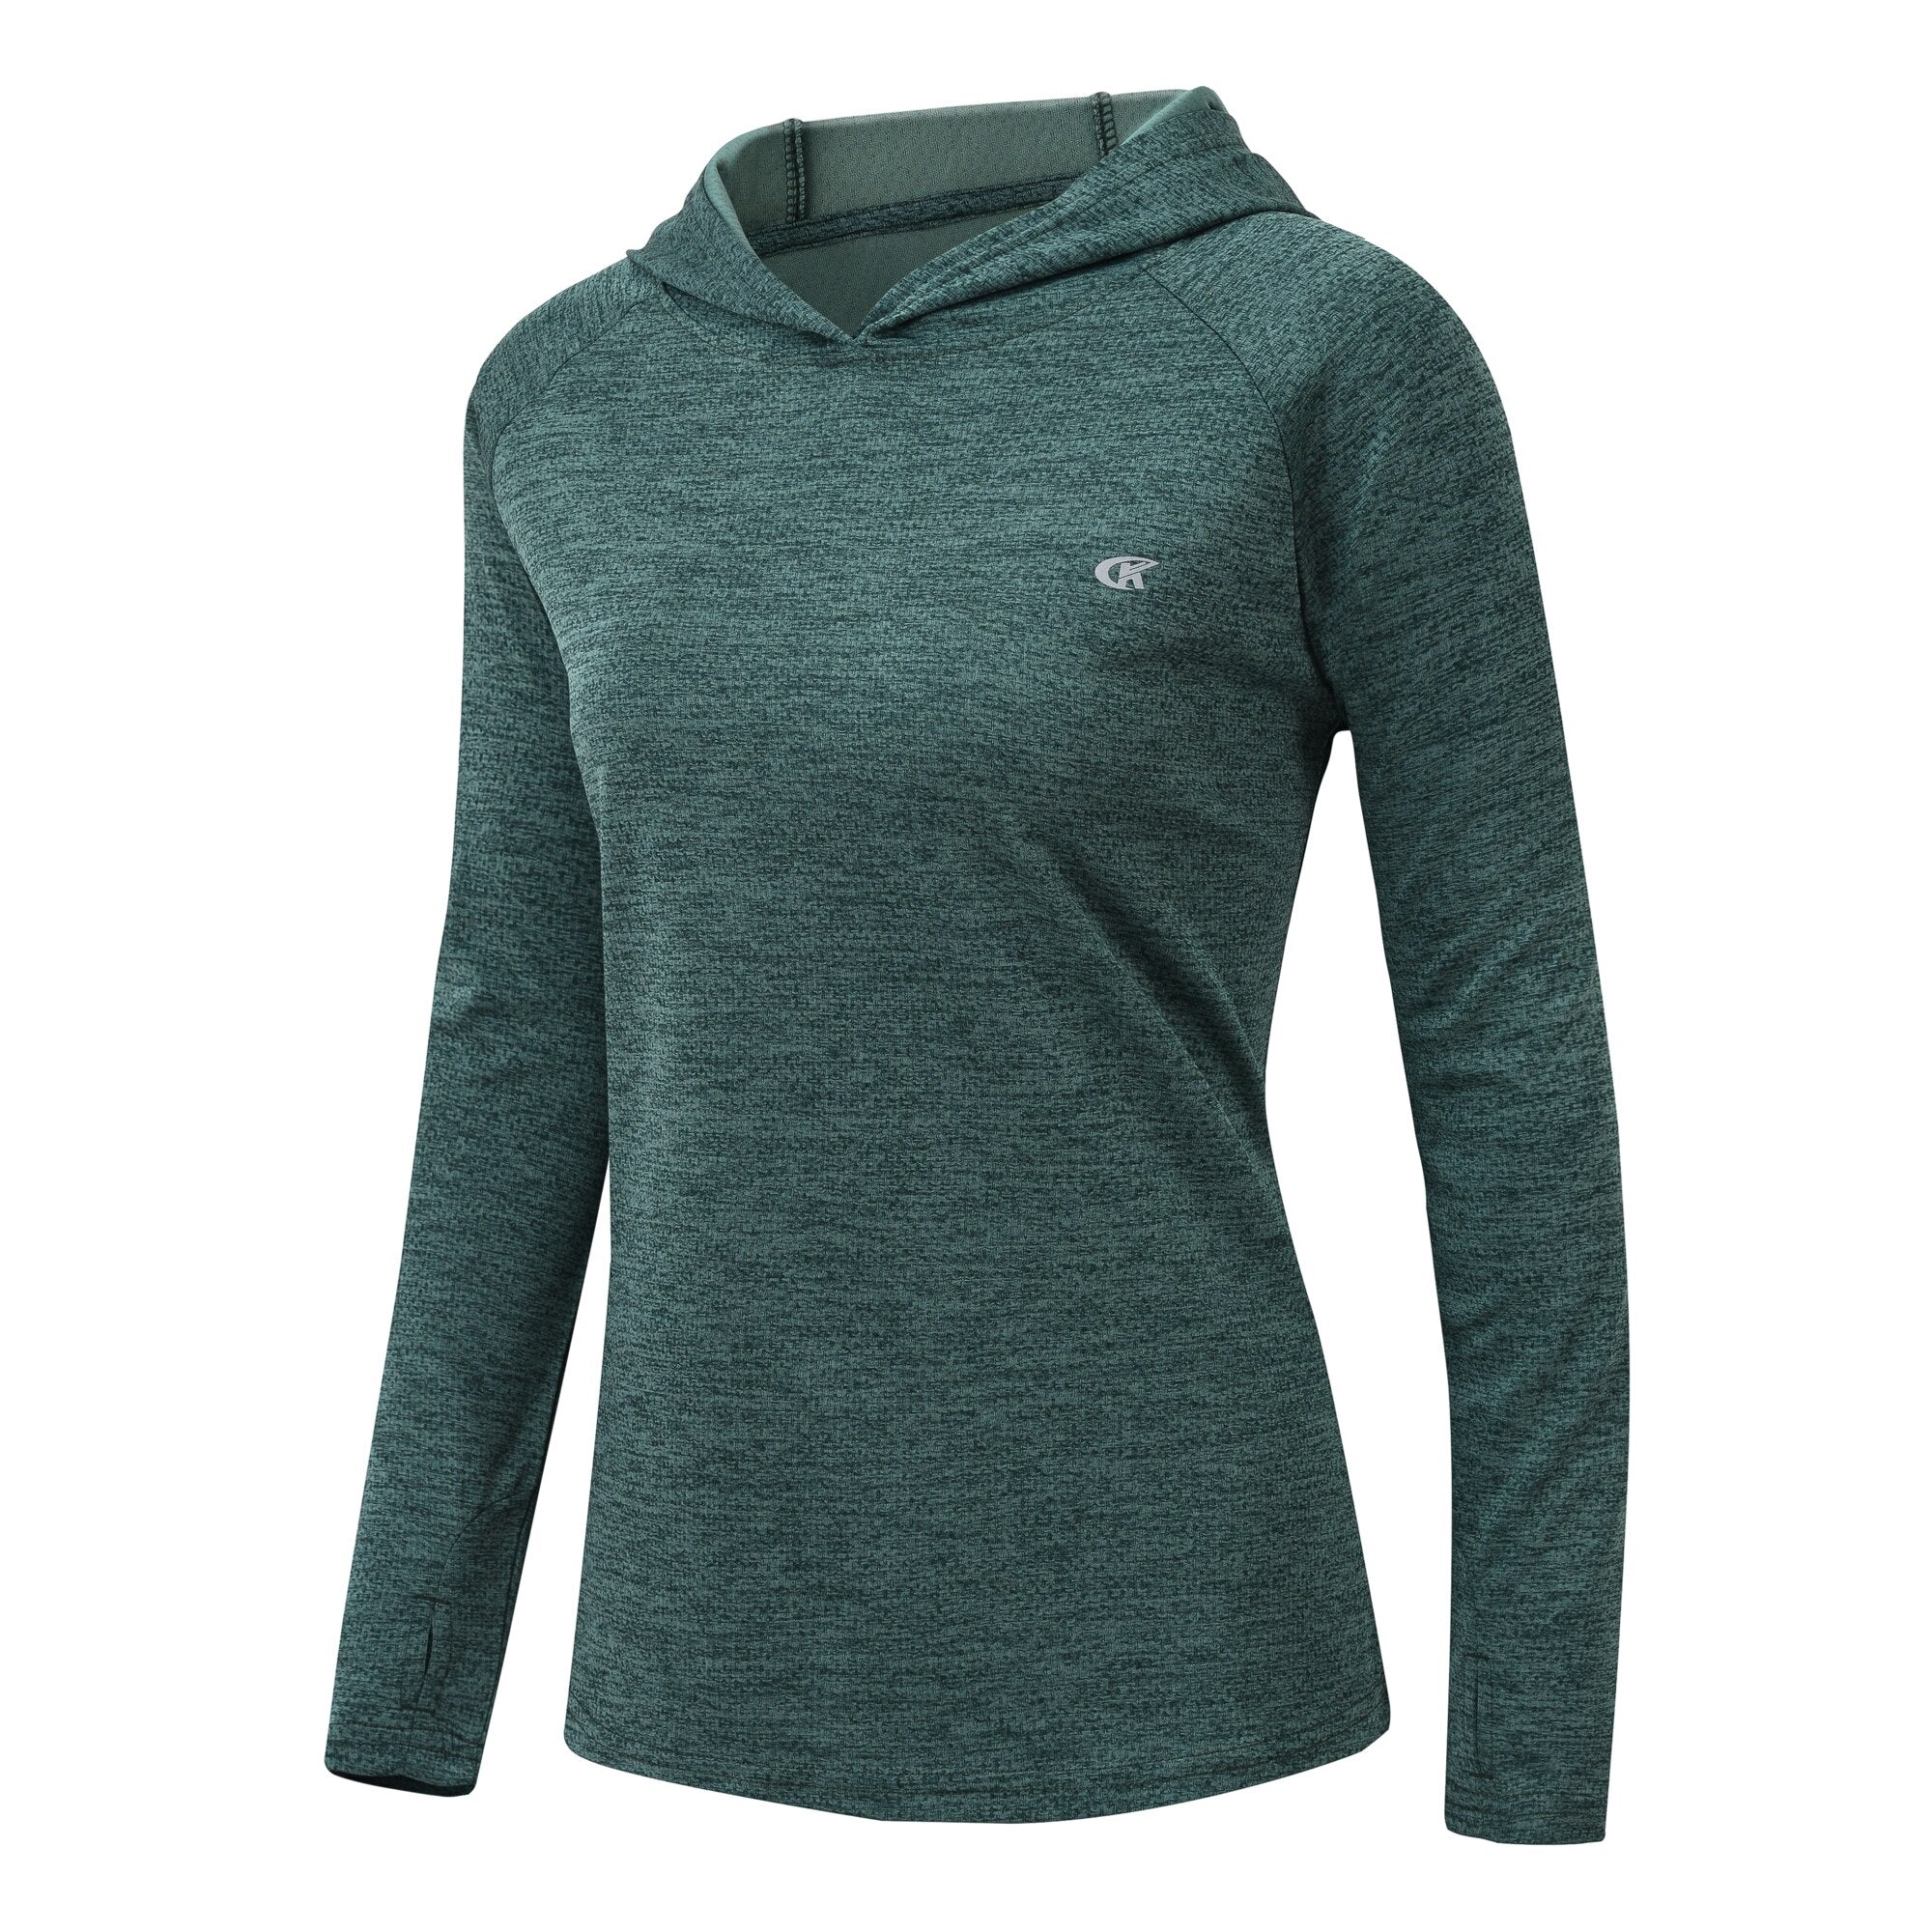 Comprar cyan Hiking and Running Long Sleeve T-Shirt Rash Guard UPF 50+ Quick Dry Lightweight For women